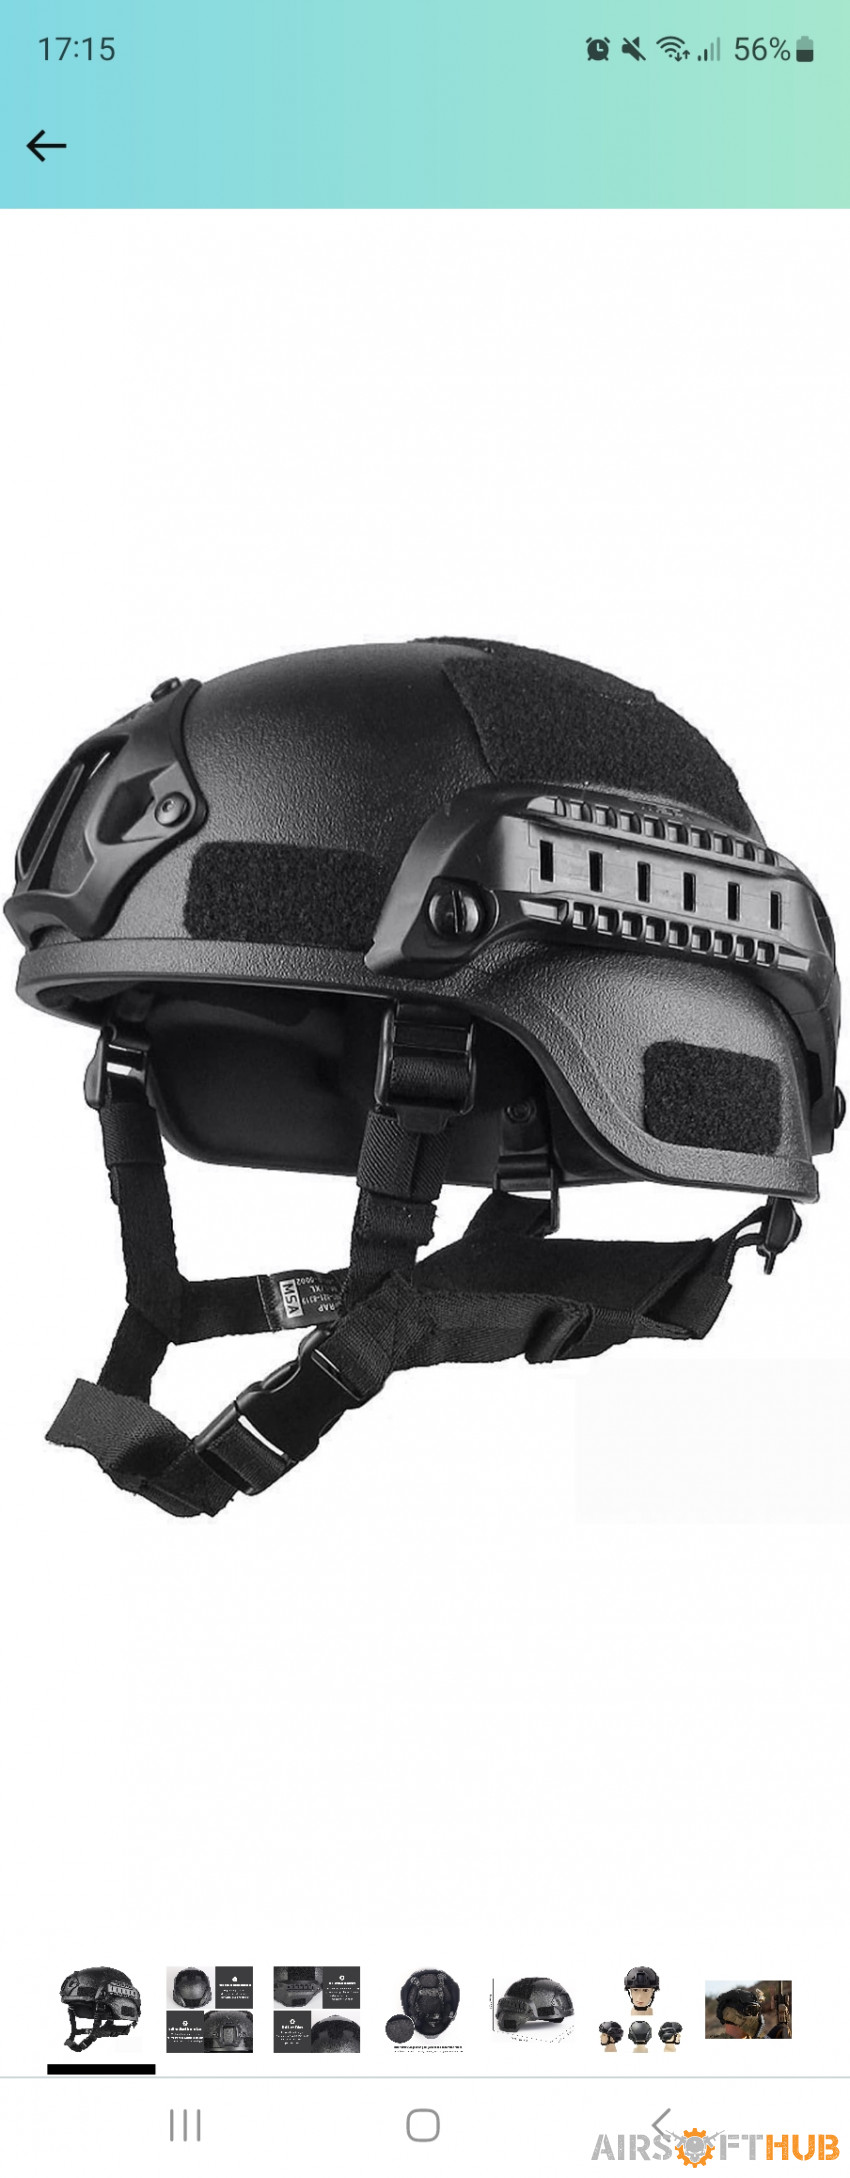 Helmet - Used airsoft equipment